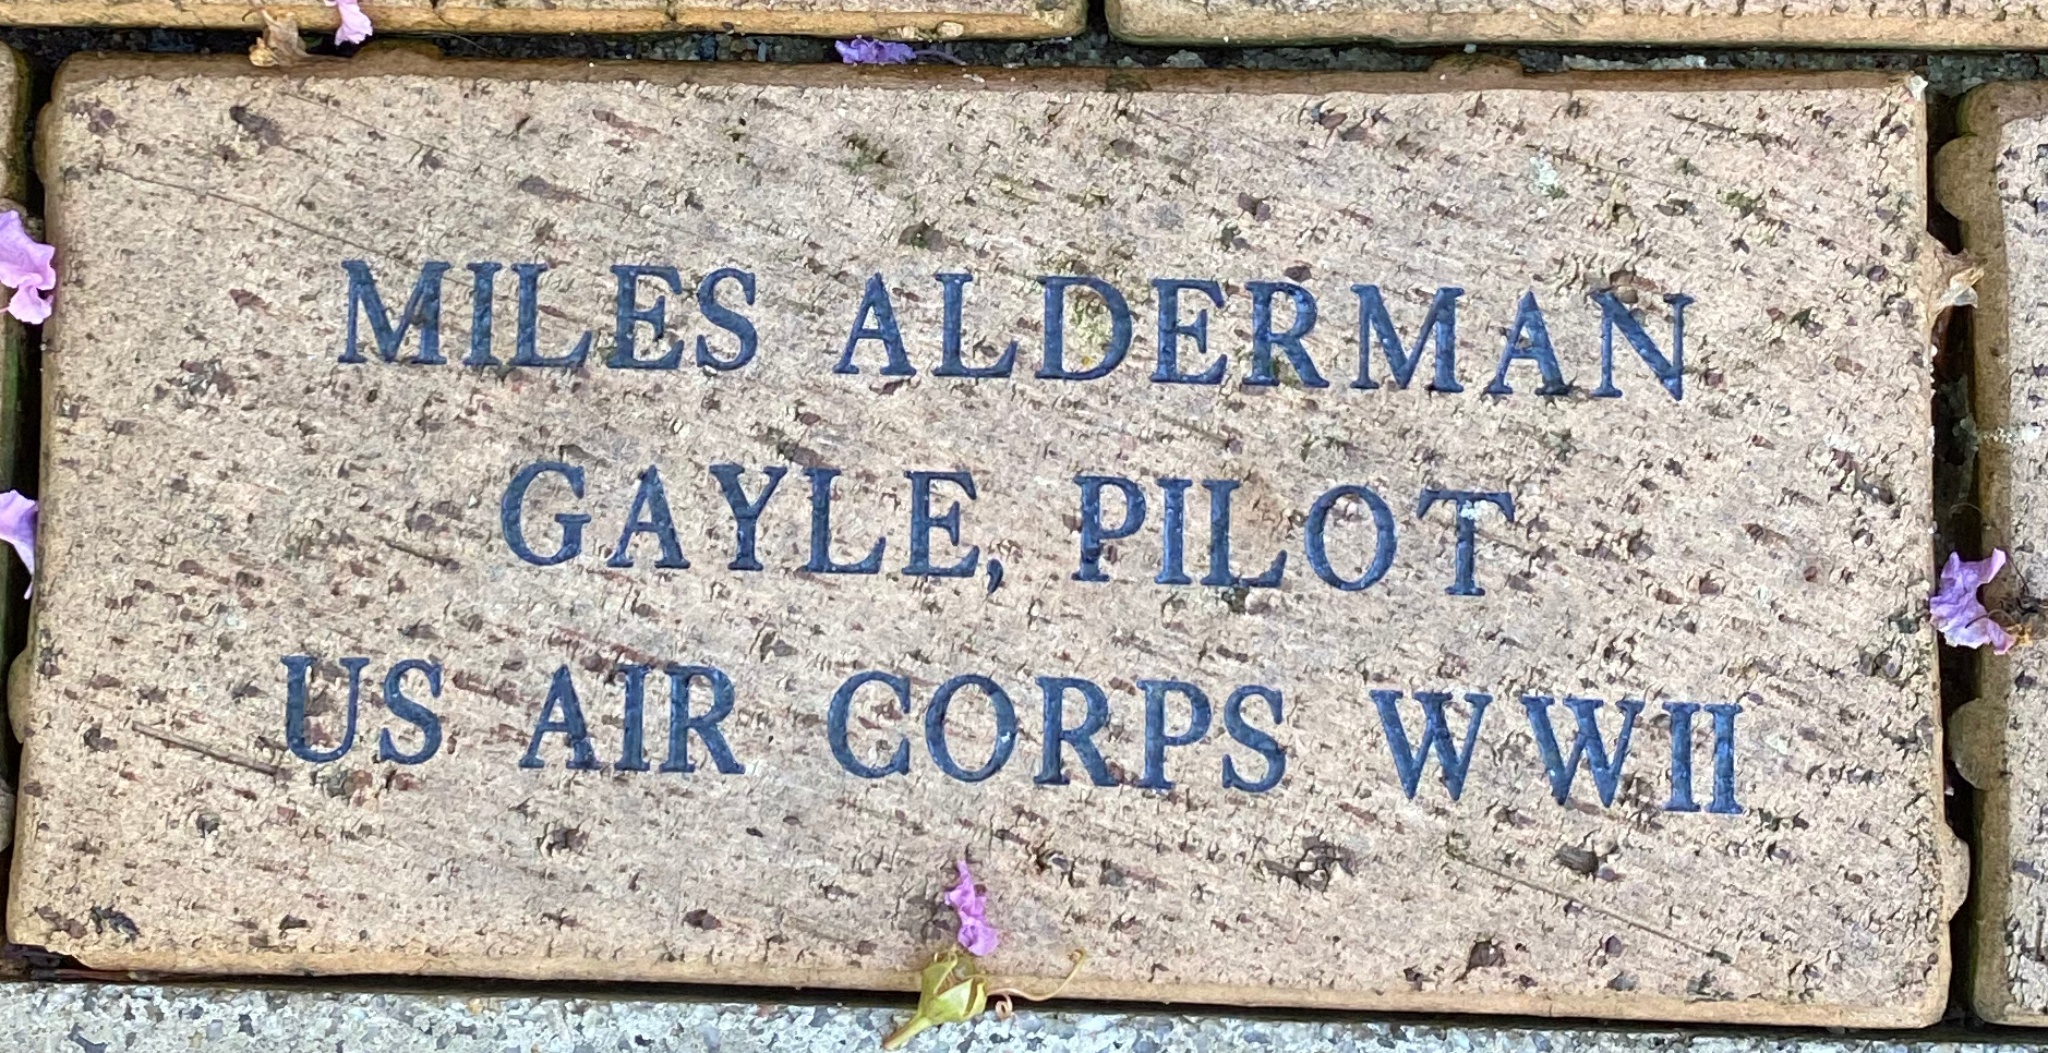 MILES ALDERMAN  GAYLE, PILOT US AIR CORPS WWII